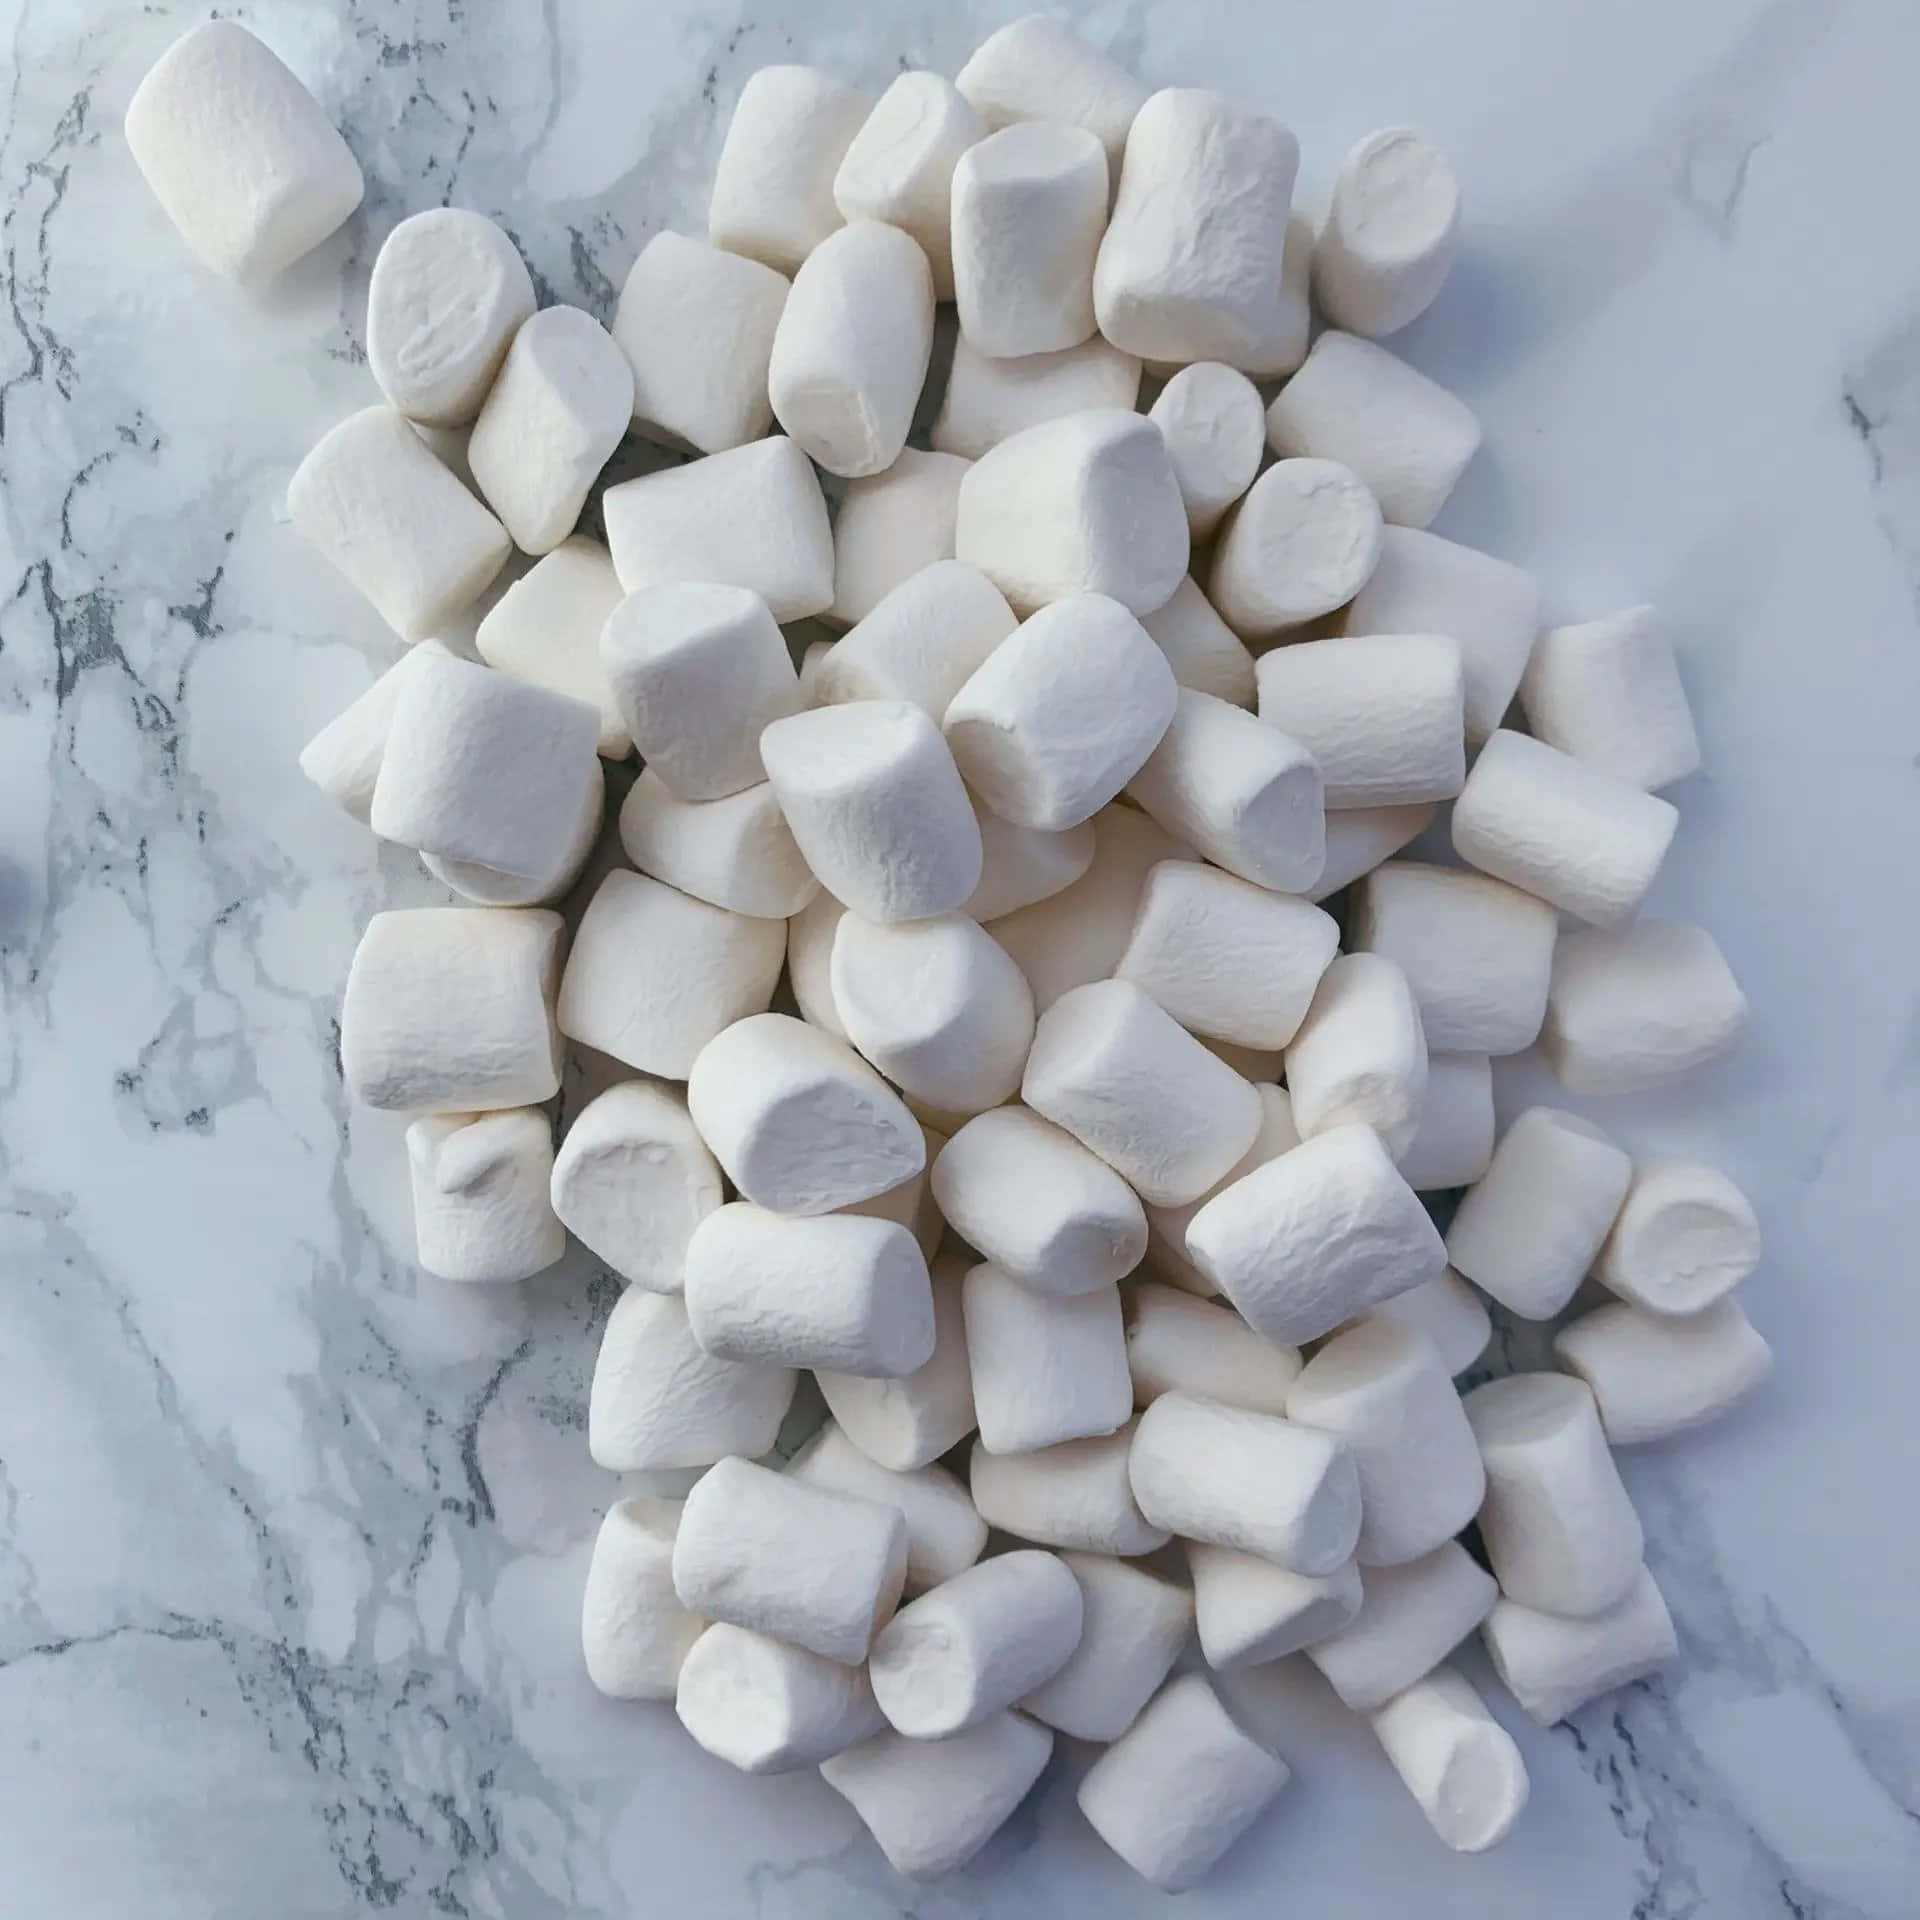 Delicious Marshmallow Confection